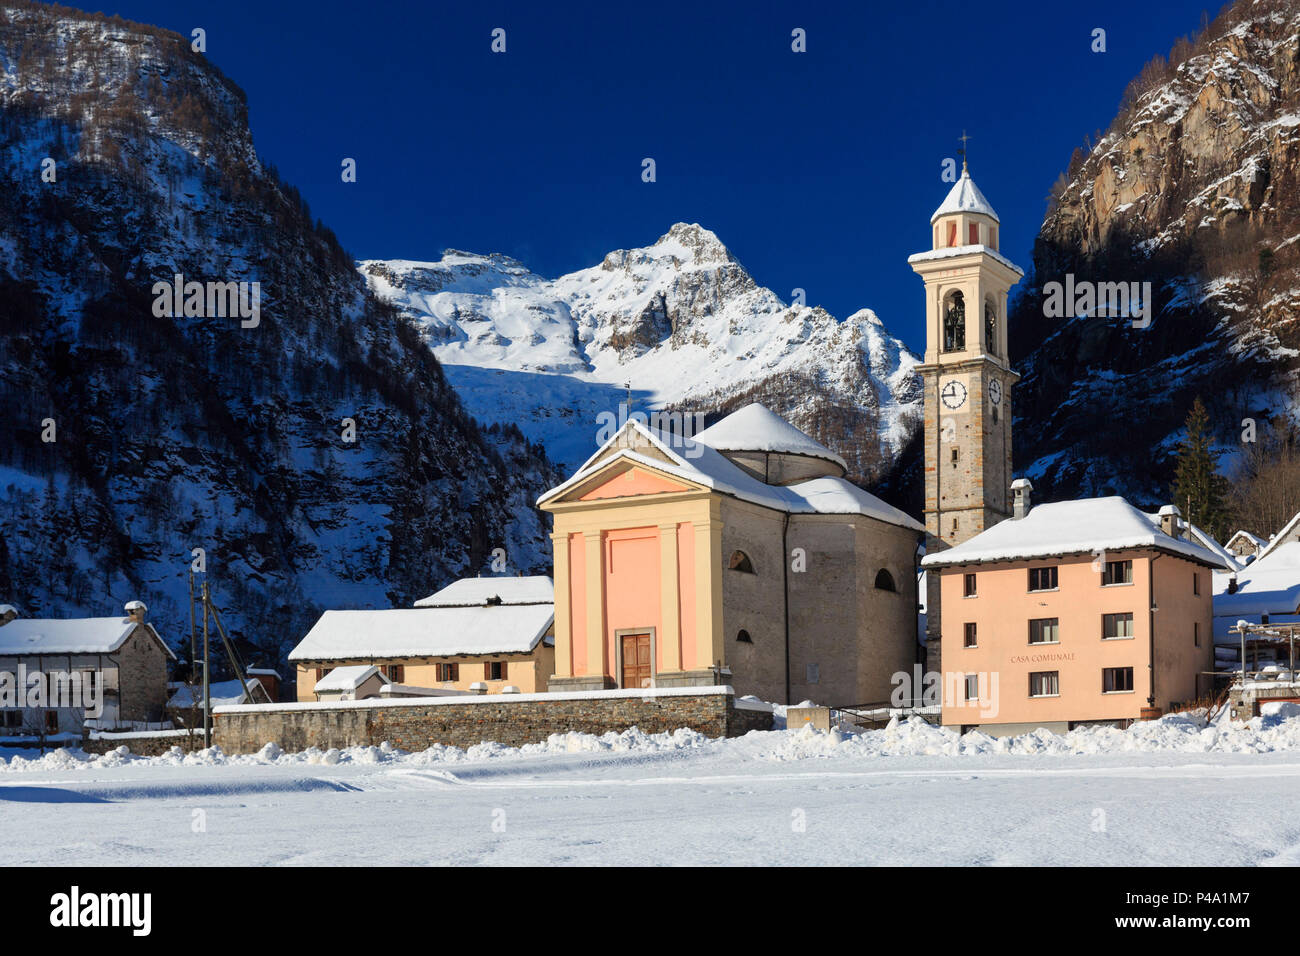 The church of the village Sonogno in winter with Mount Zucchero in the background, Sonogno, Val Verzasca, Canton Ticino, Switzerland, Europe Stock Photo